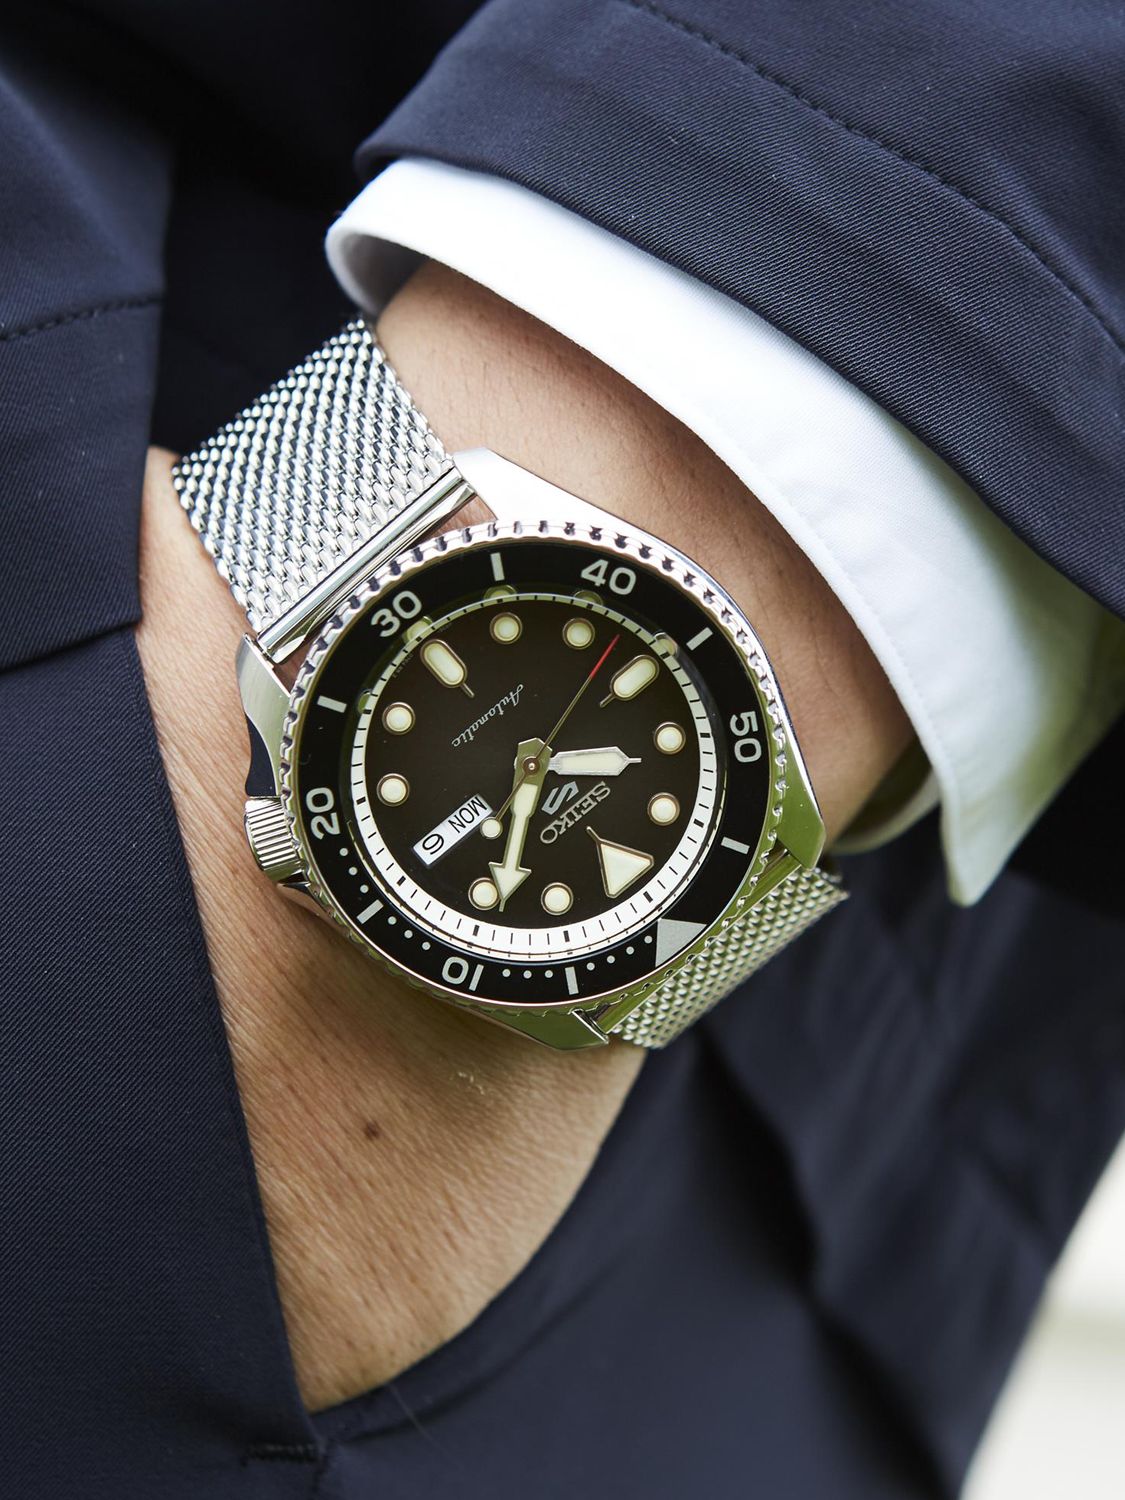 Seiko SRPD73K1 Men's 5 Sports Automatic Day Date Bracelet Strap Watch,  Silver/Black at John Lewis & Partners